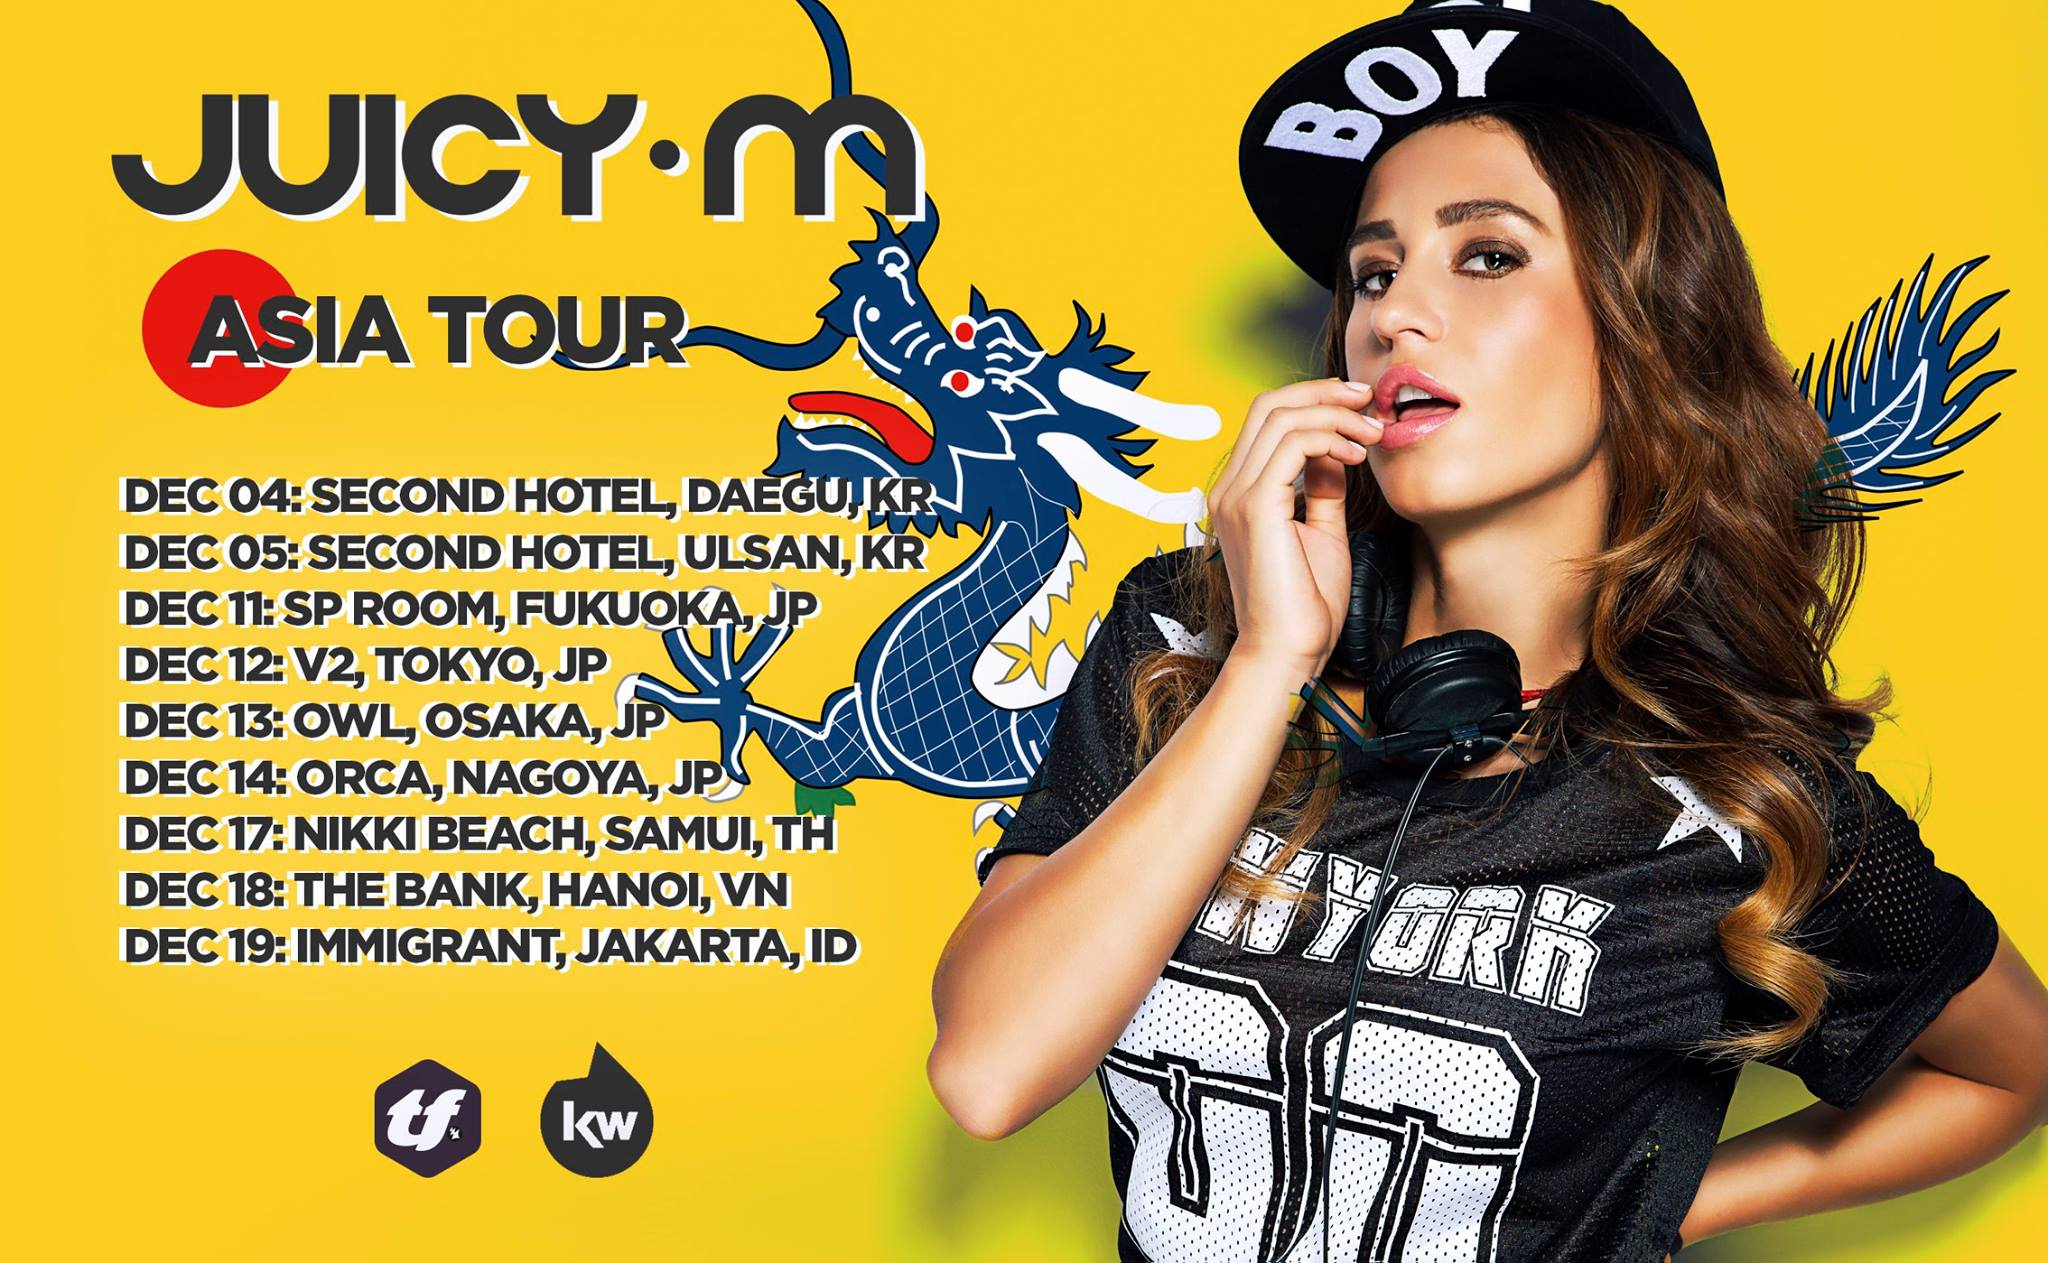 JUICY M 2015 ASIA TOUR